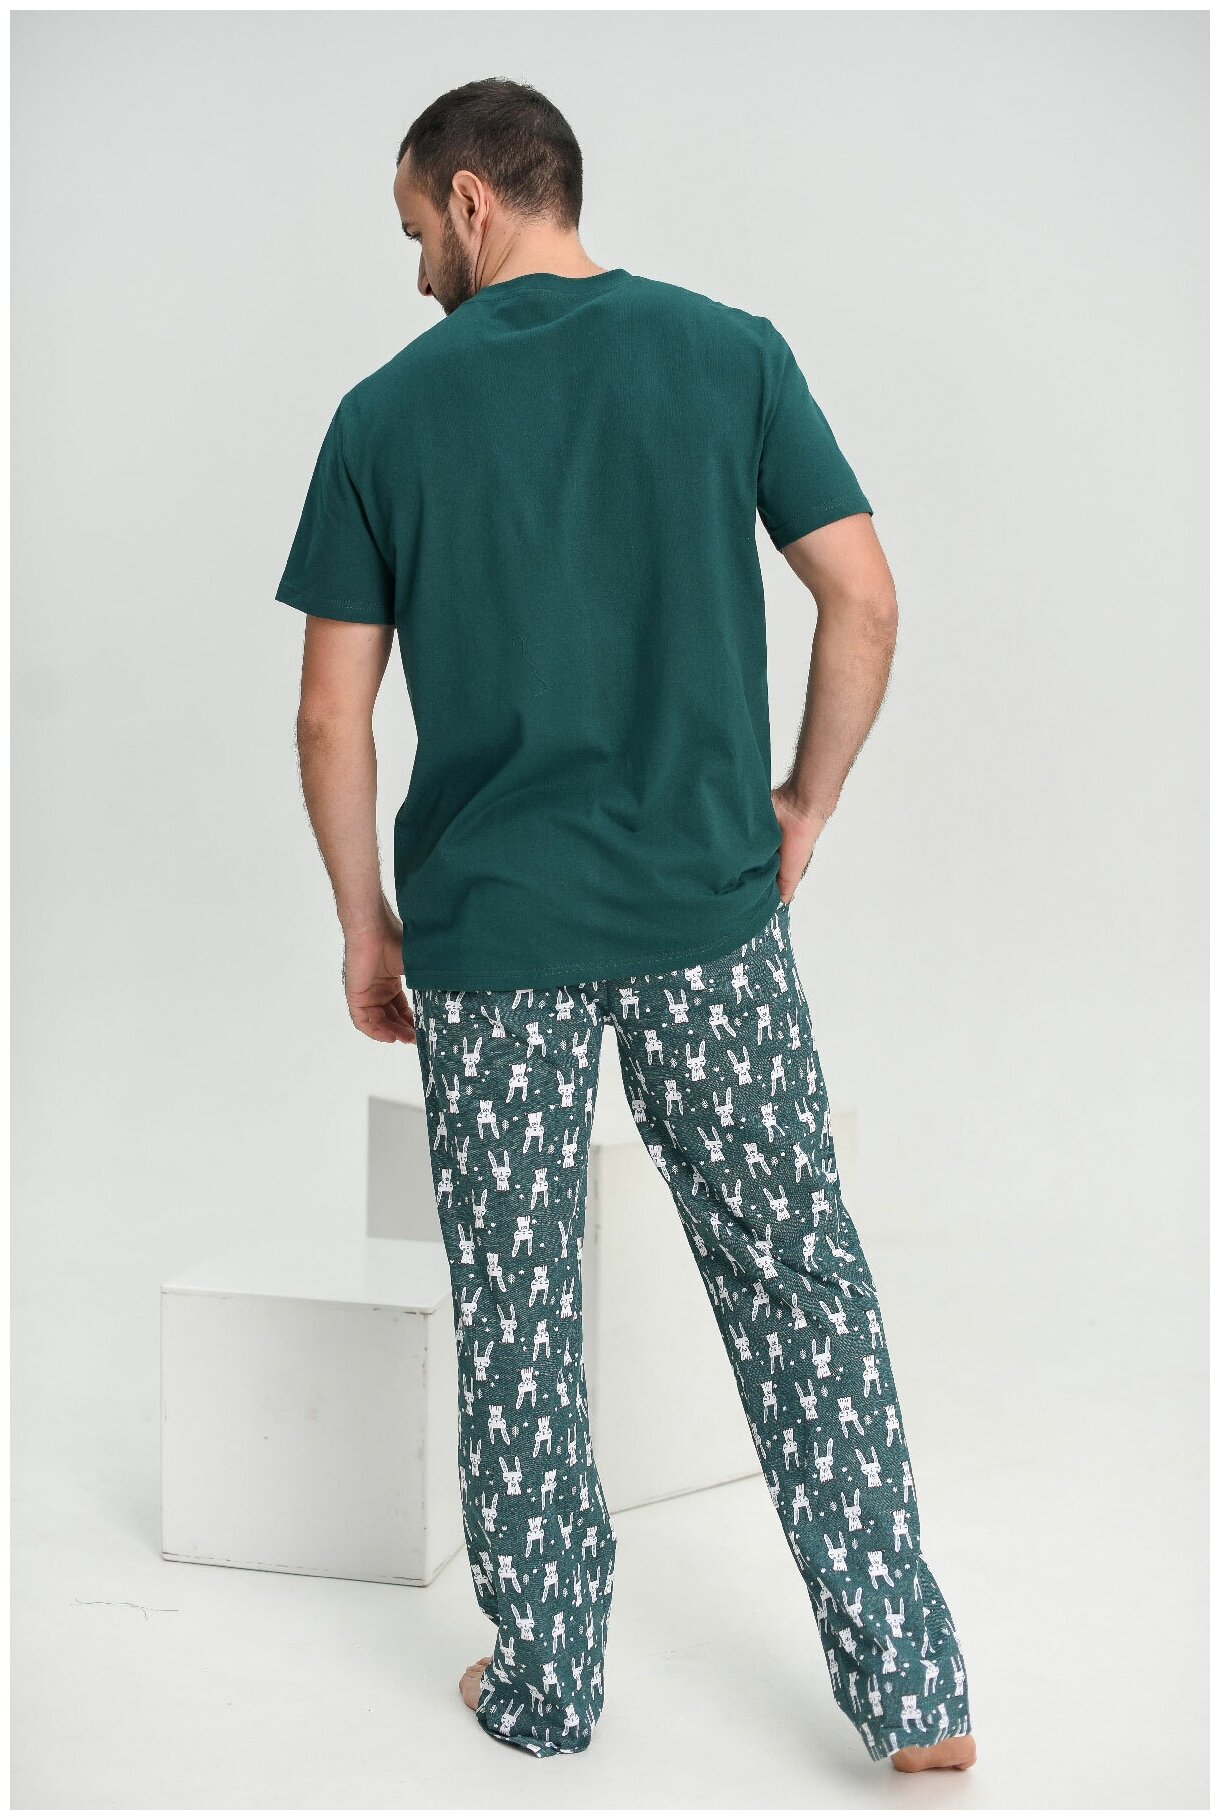 Мужская пижама Ушастик Темно-зеленый 52 Кулирка Оптима трикотаж - фотография № 6